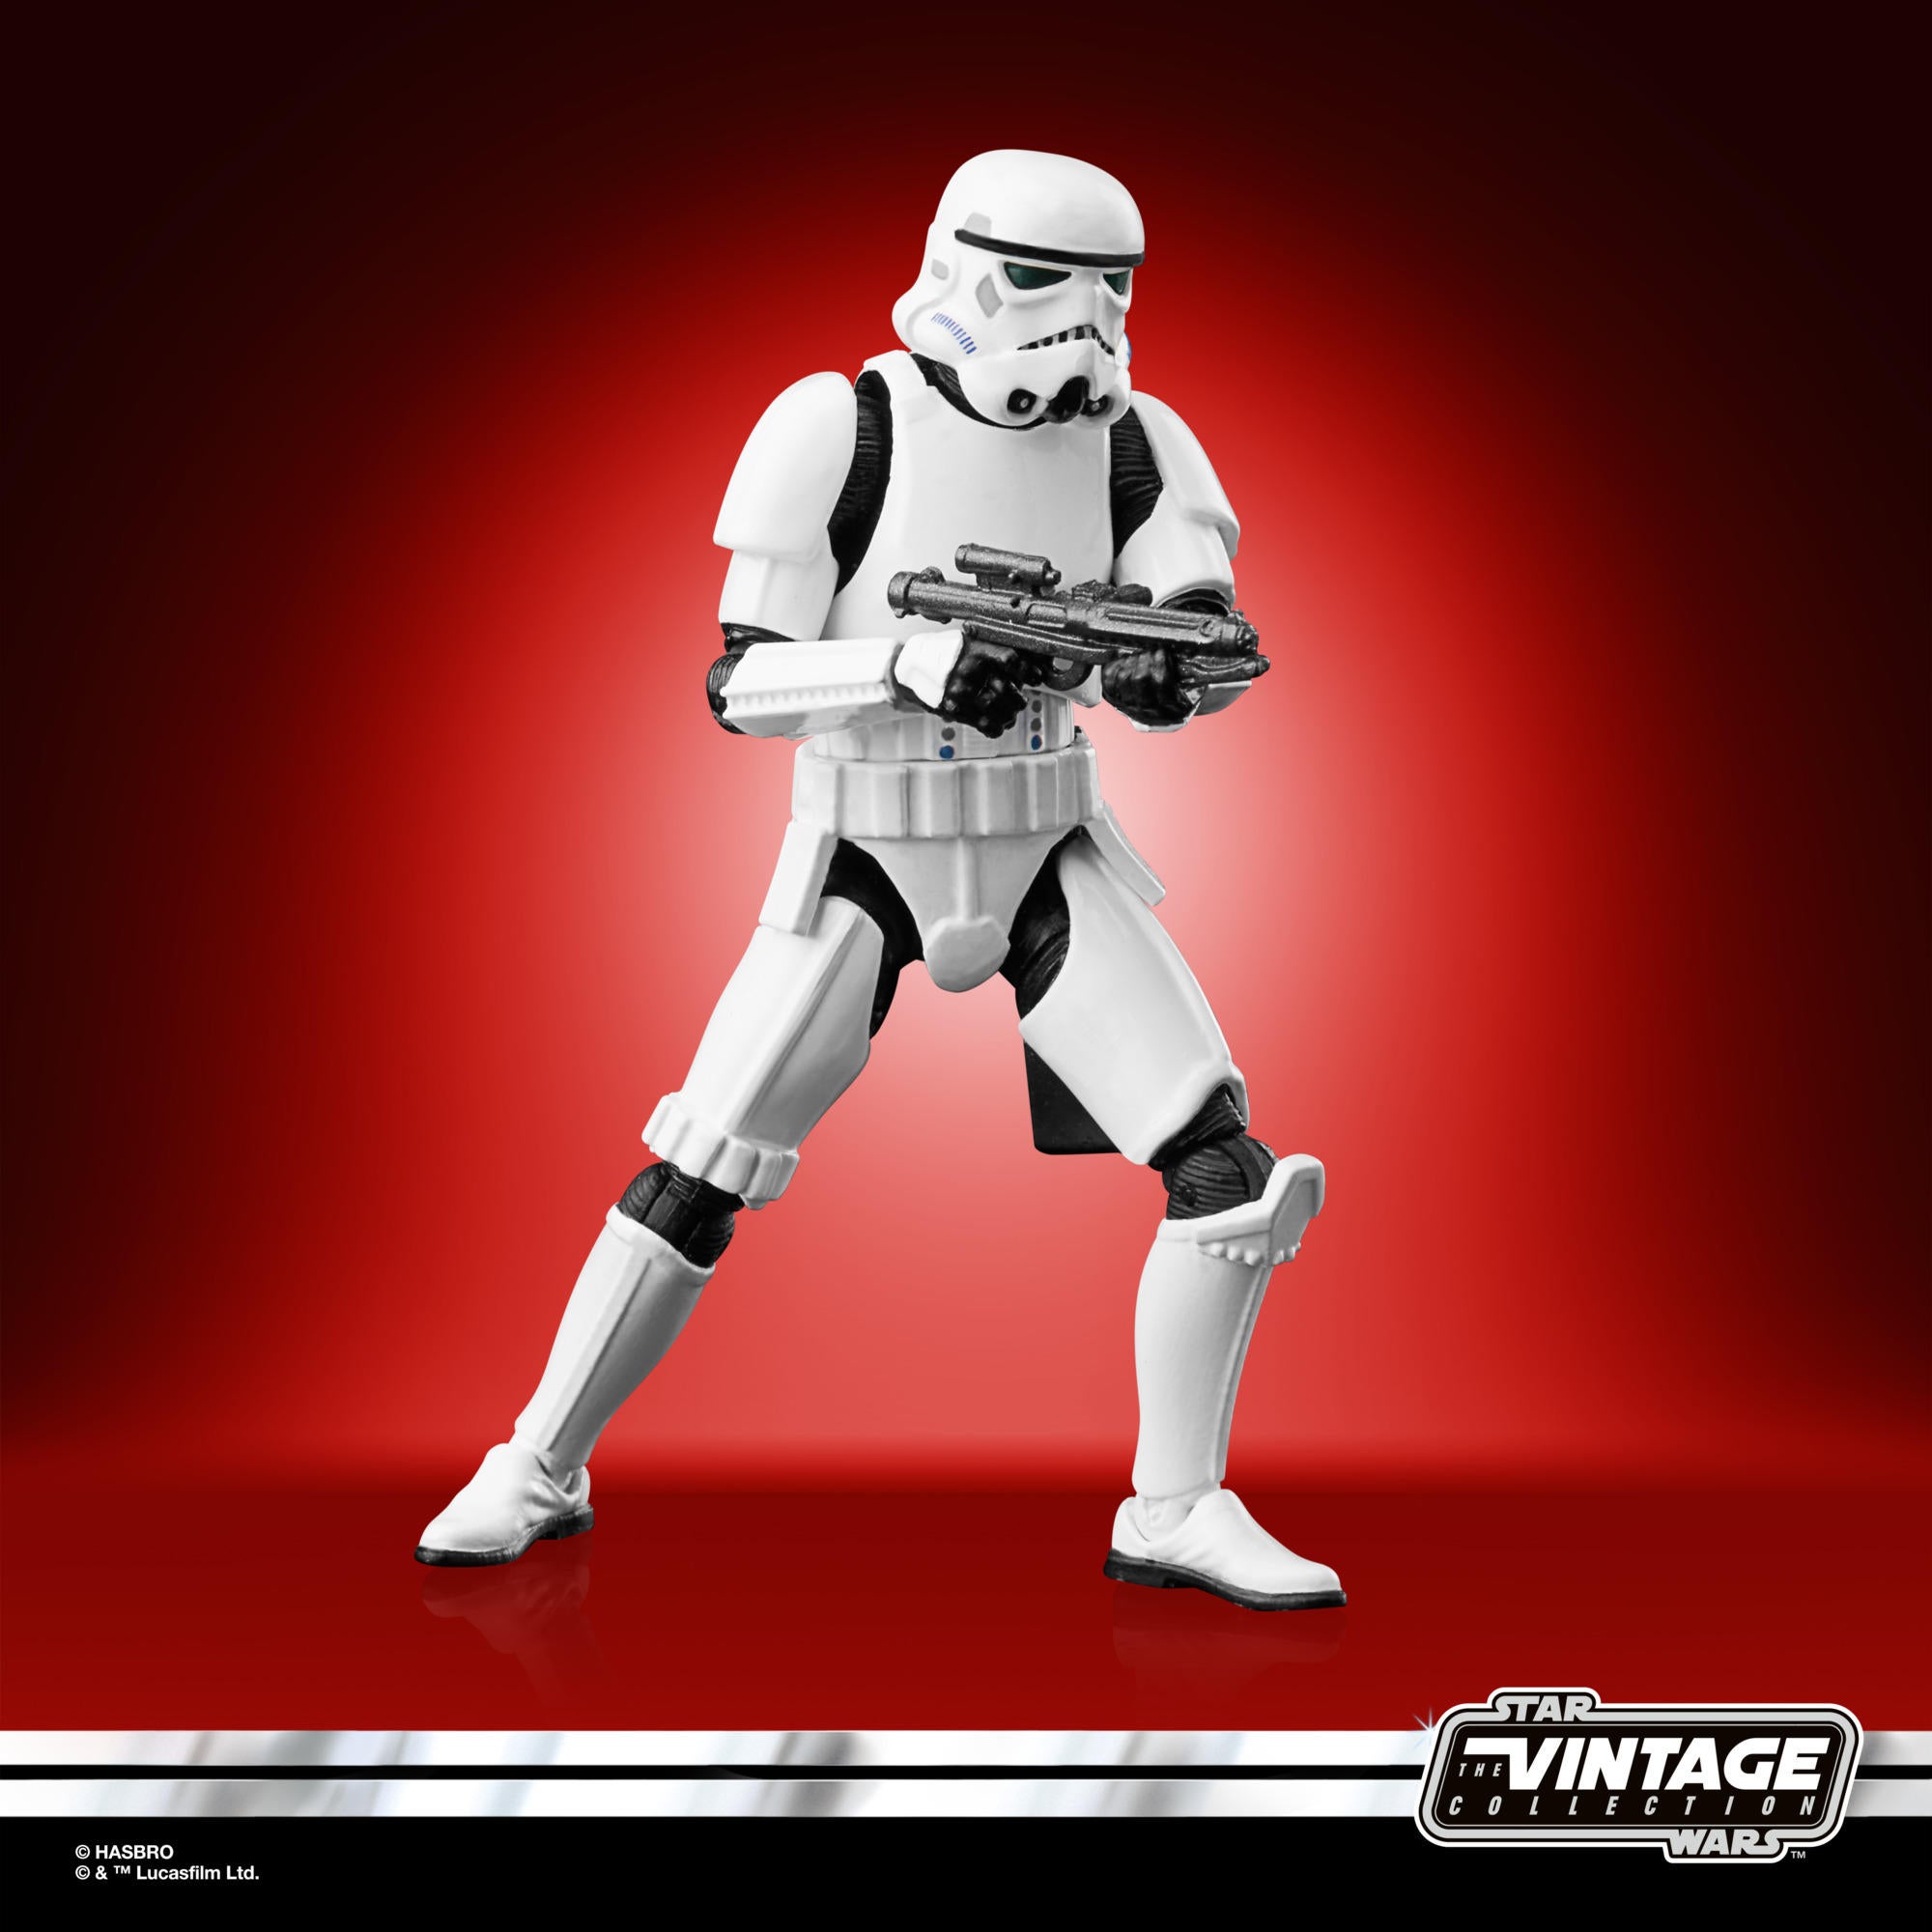 star-wars-the-vintage-collection-3-75-inch-stormtrooper-figure.jpg